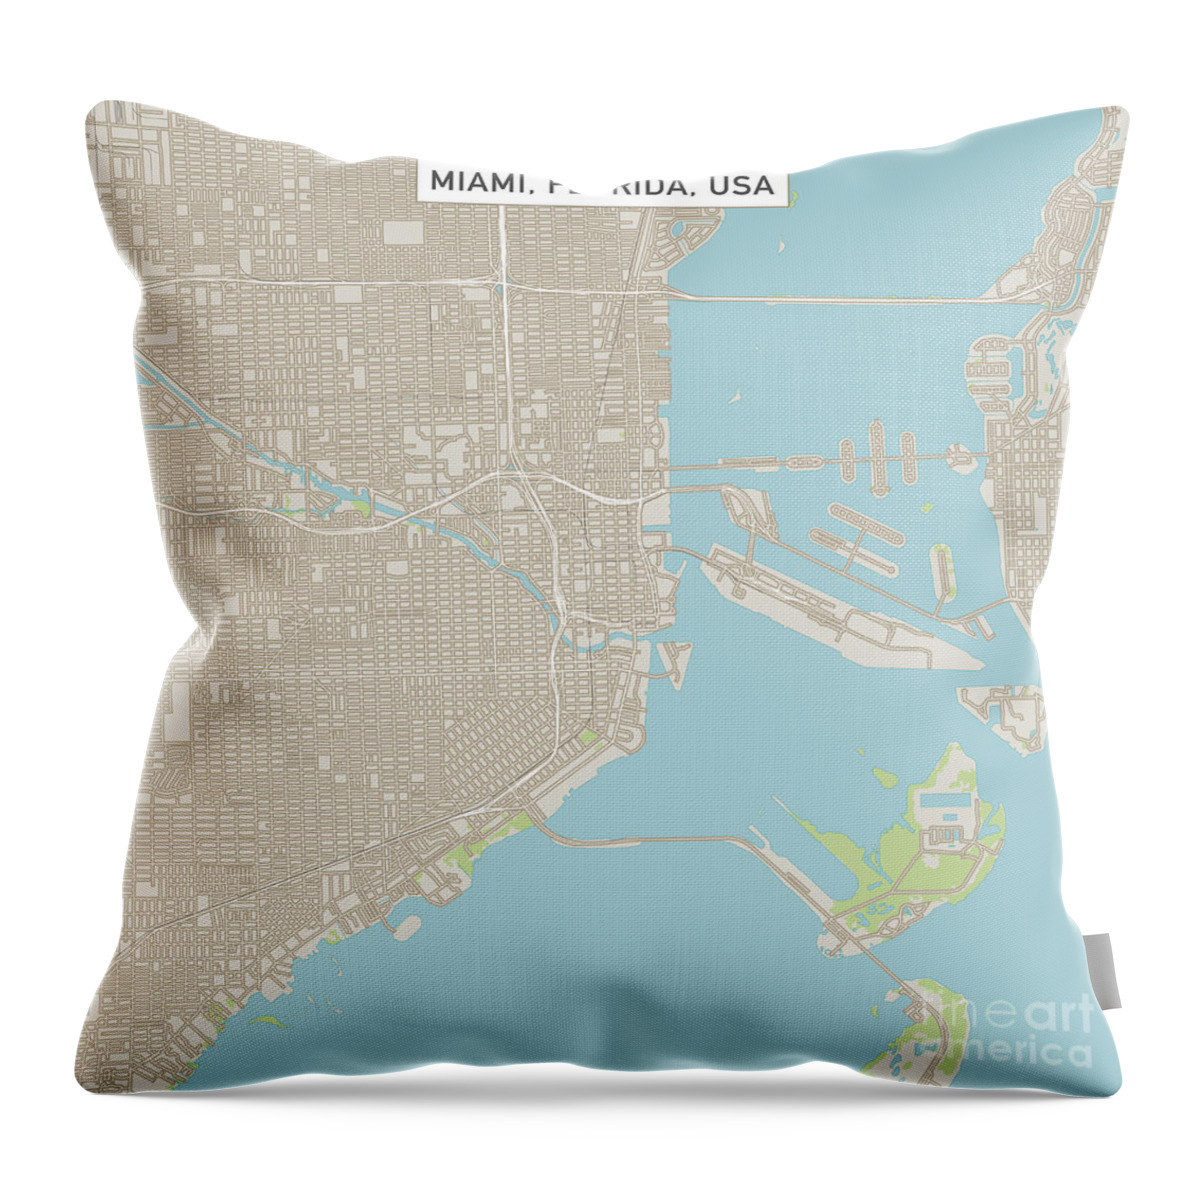 Miami Throw Pillow featuring the digital art Miami Florida US City Street Map by Frank Ramspott